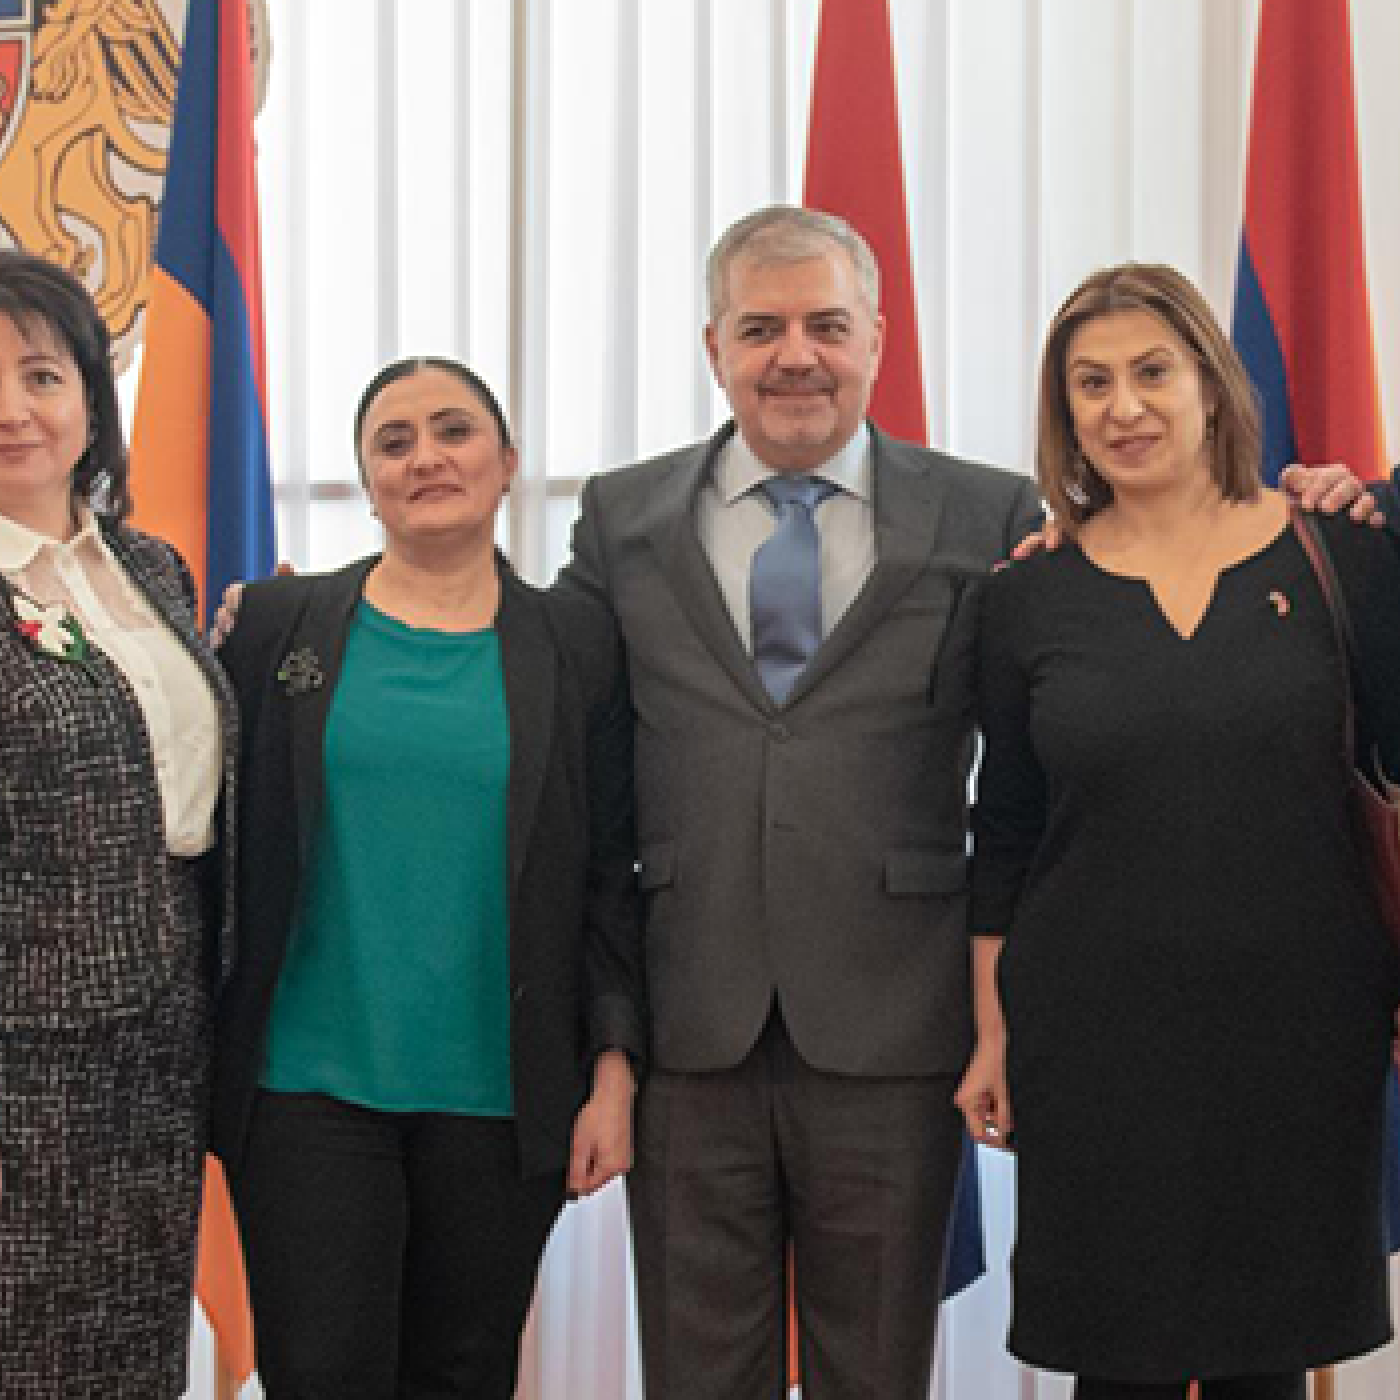 IFES Armenia alumni pose with current IFES Senior Elections Expert Aghasi Yesayan (center).